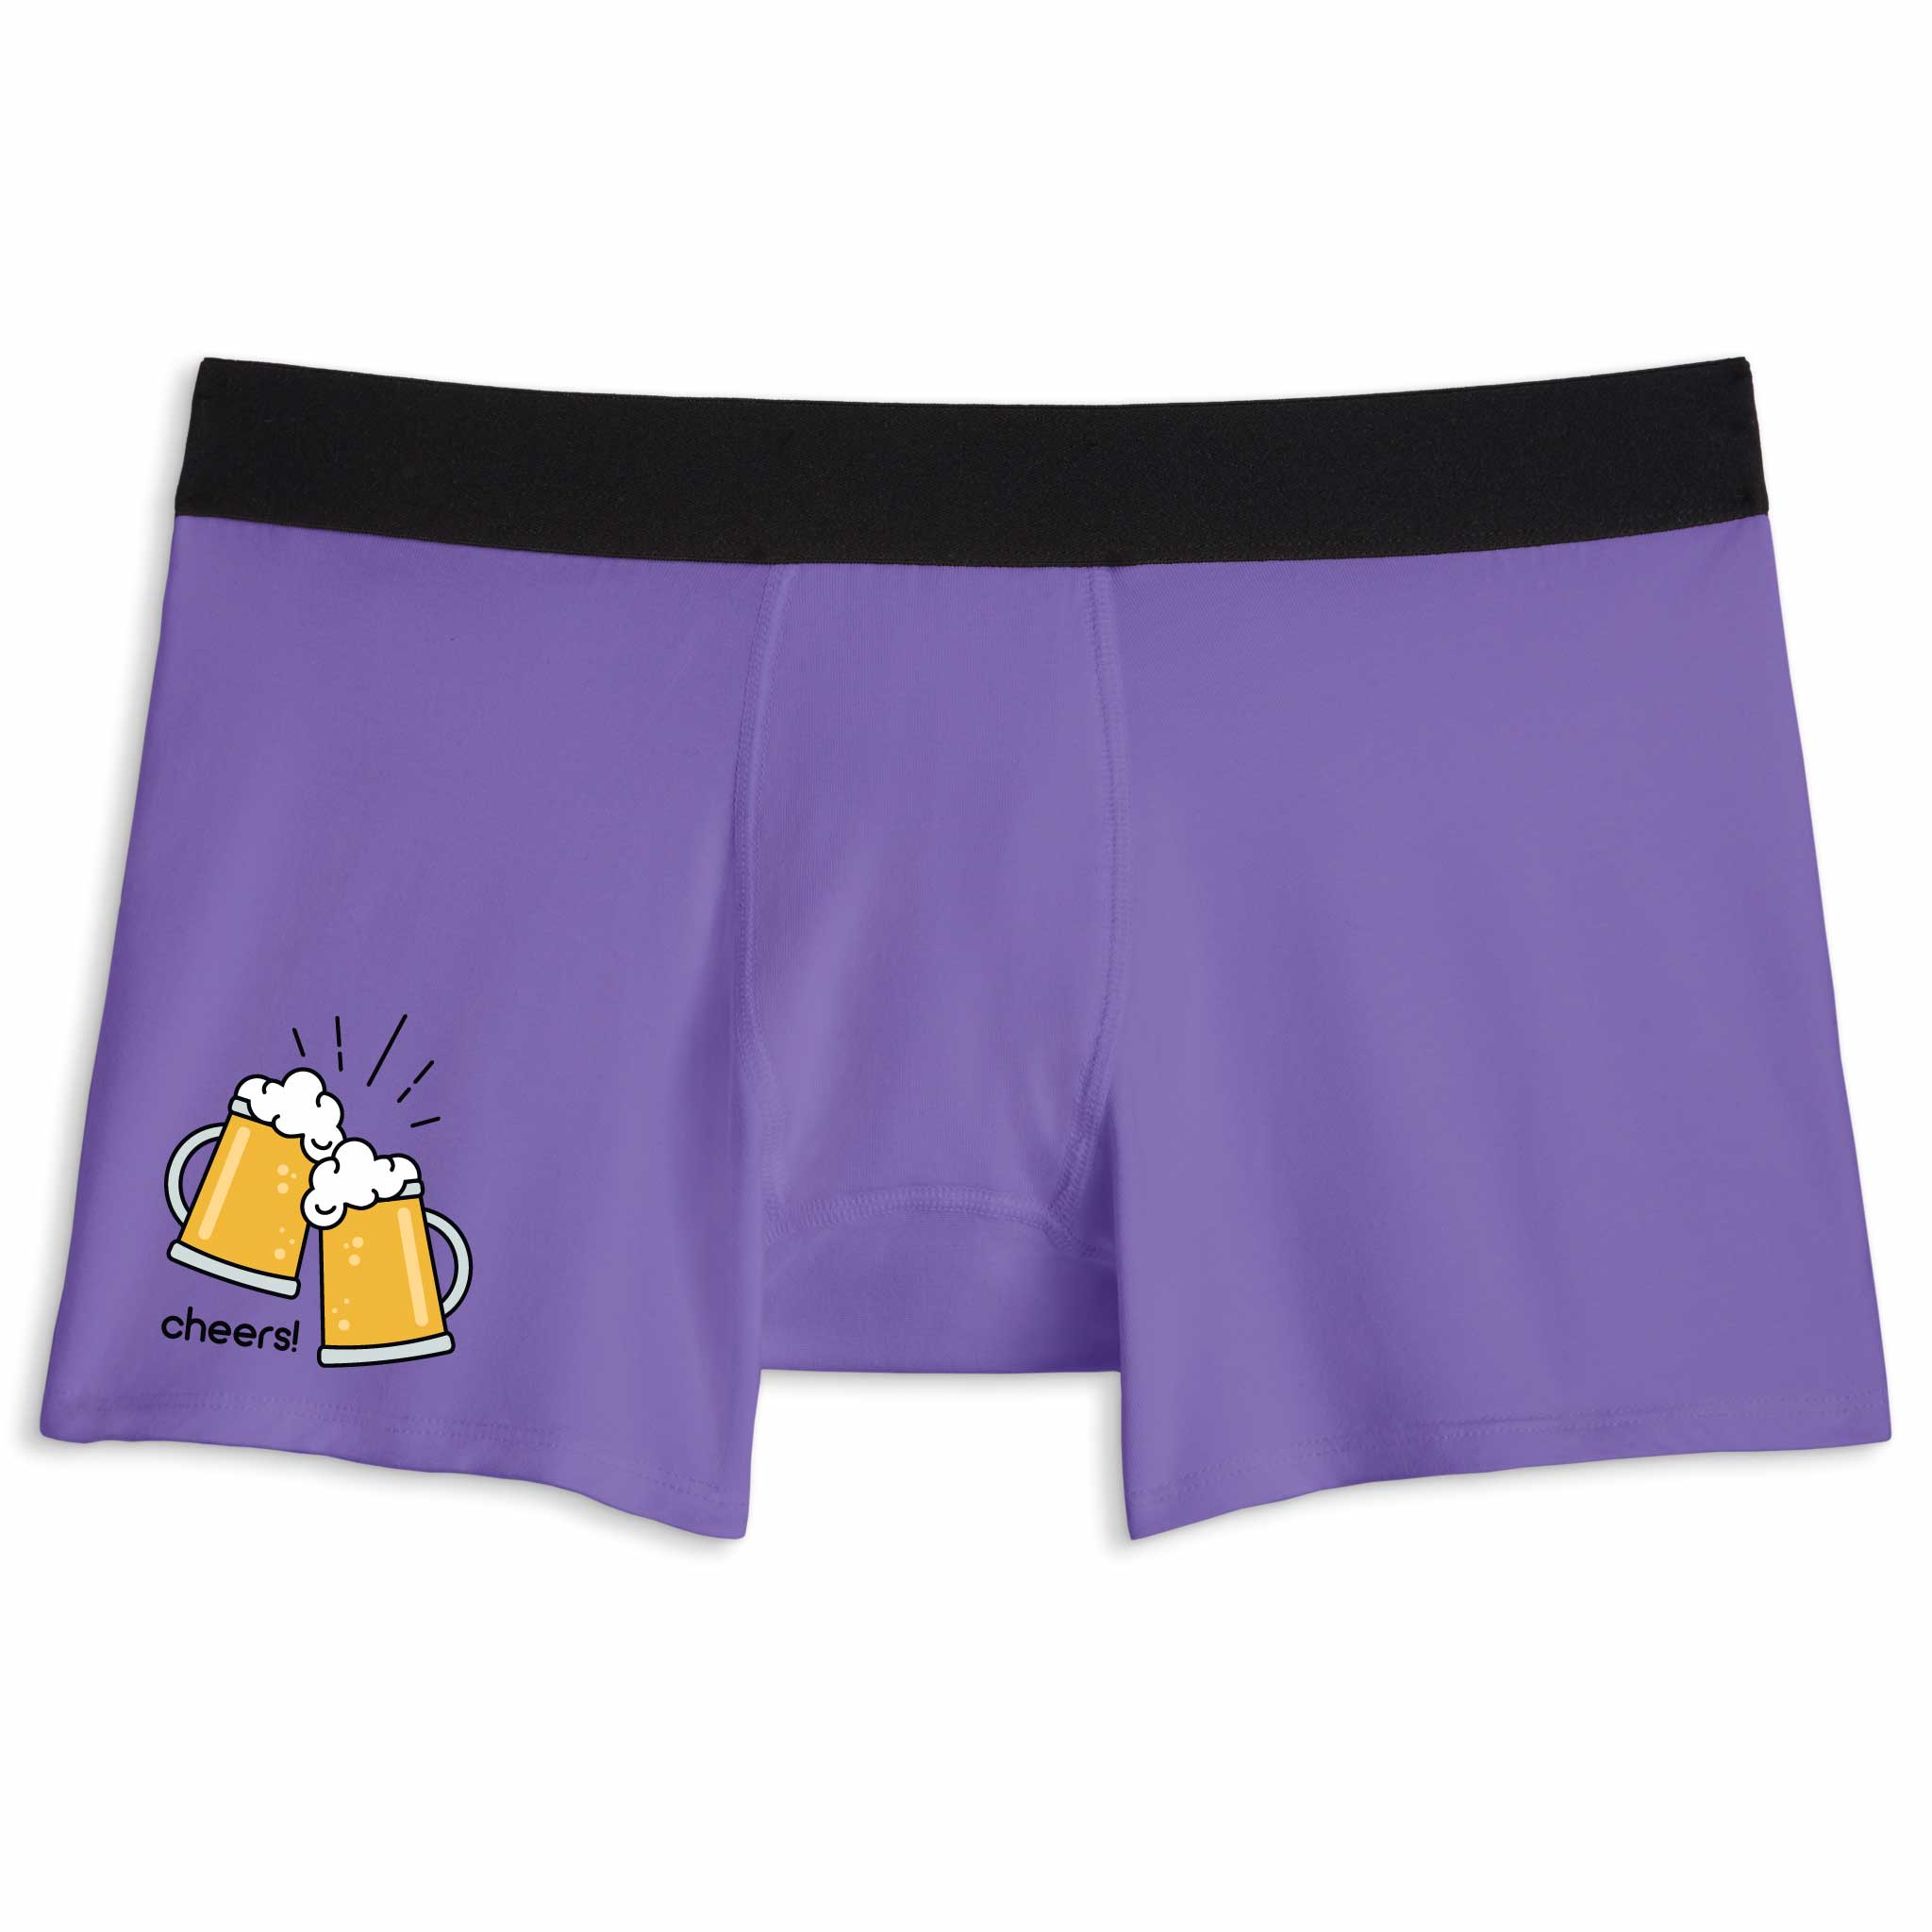 Cheers to beers | Boxer briefs underwear